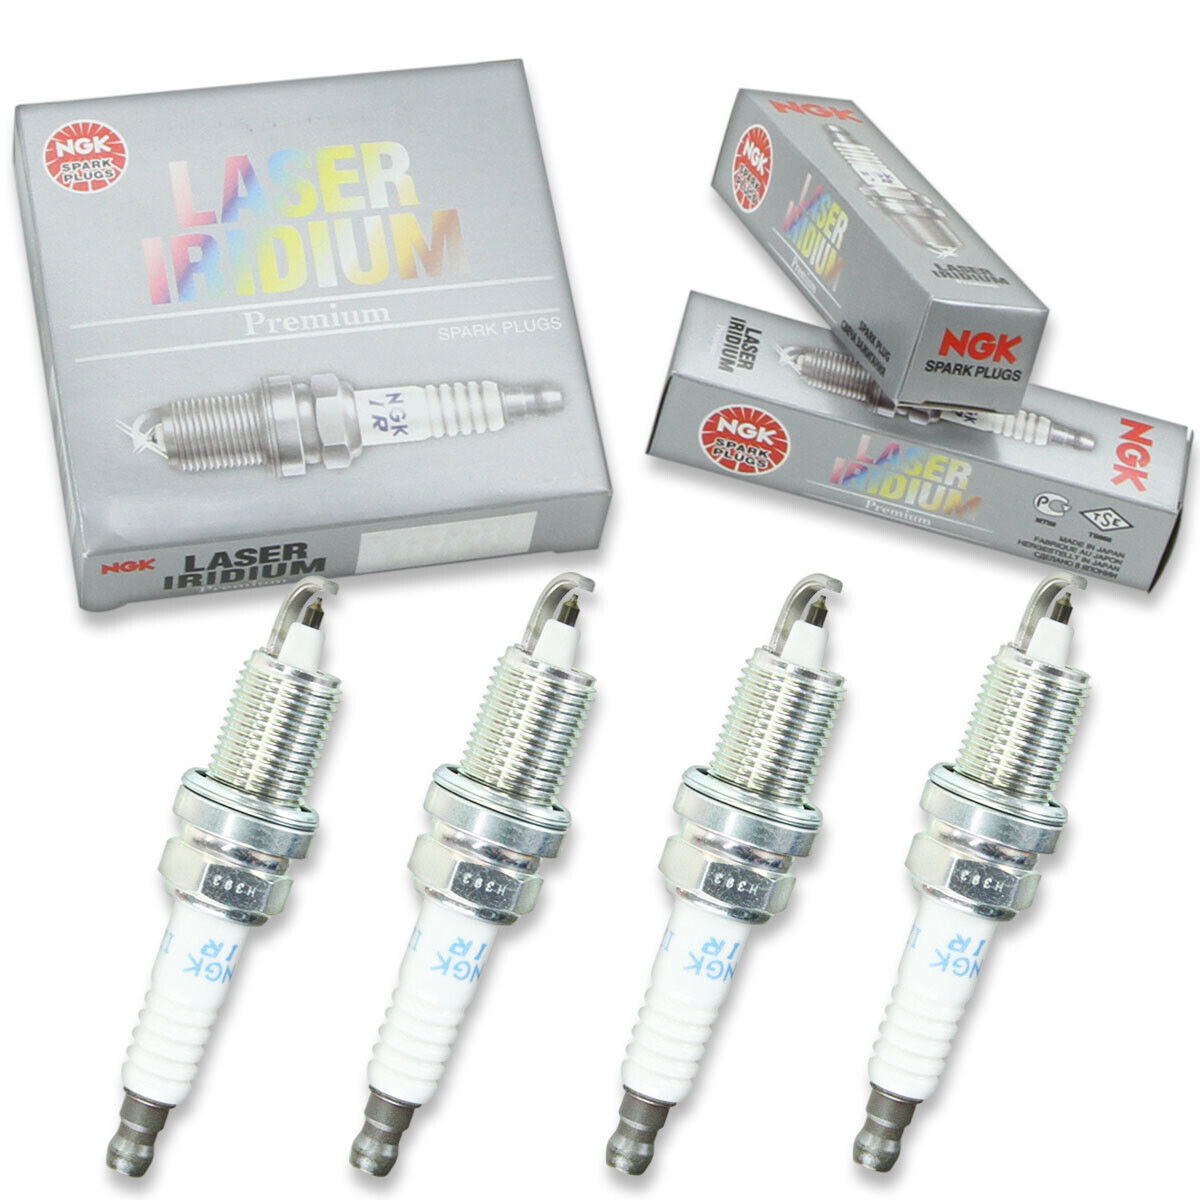 4 pc NGK 4757 IZFR6N-E Laser Iridium Spark Plugs for QC8WEP QC12PEPB QC12PEP ko